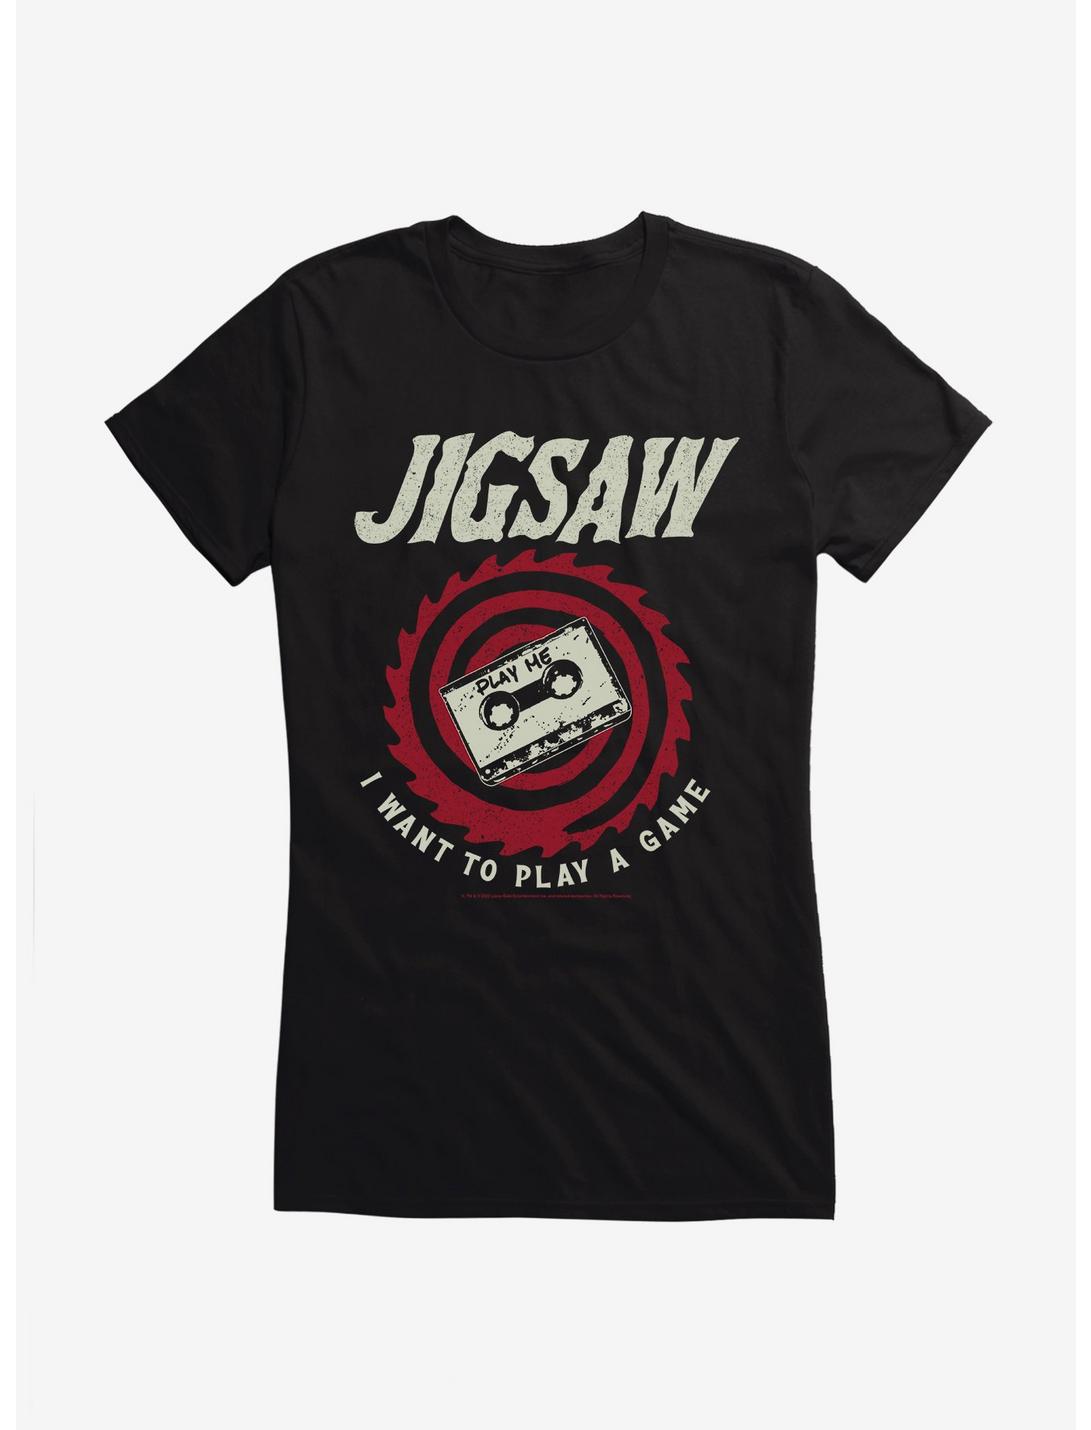 Saw Jigsaw Girls T-Shirt, BLACK, hi-res